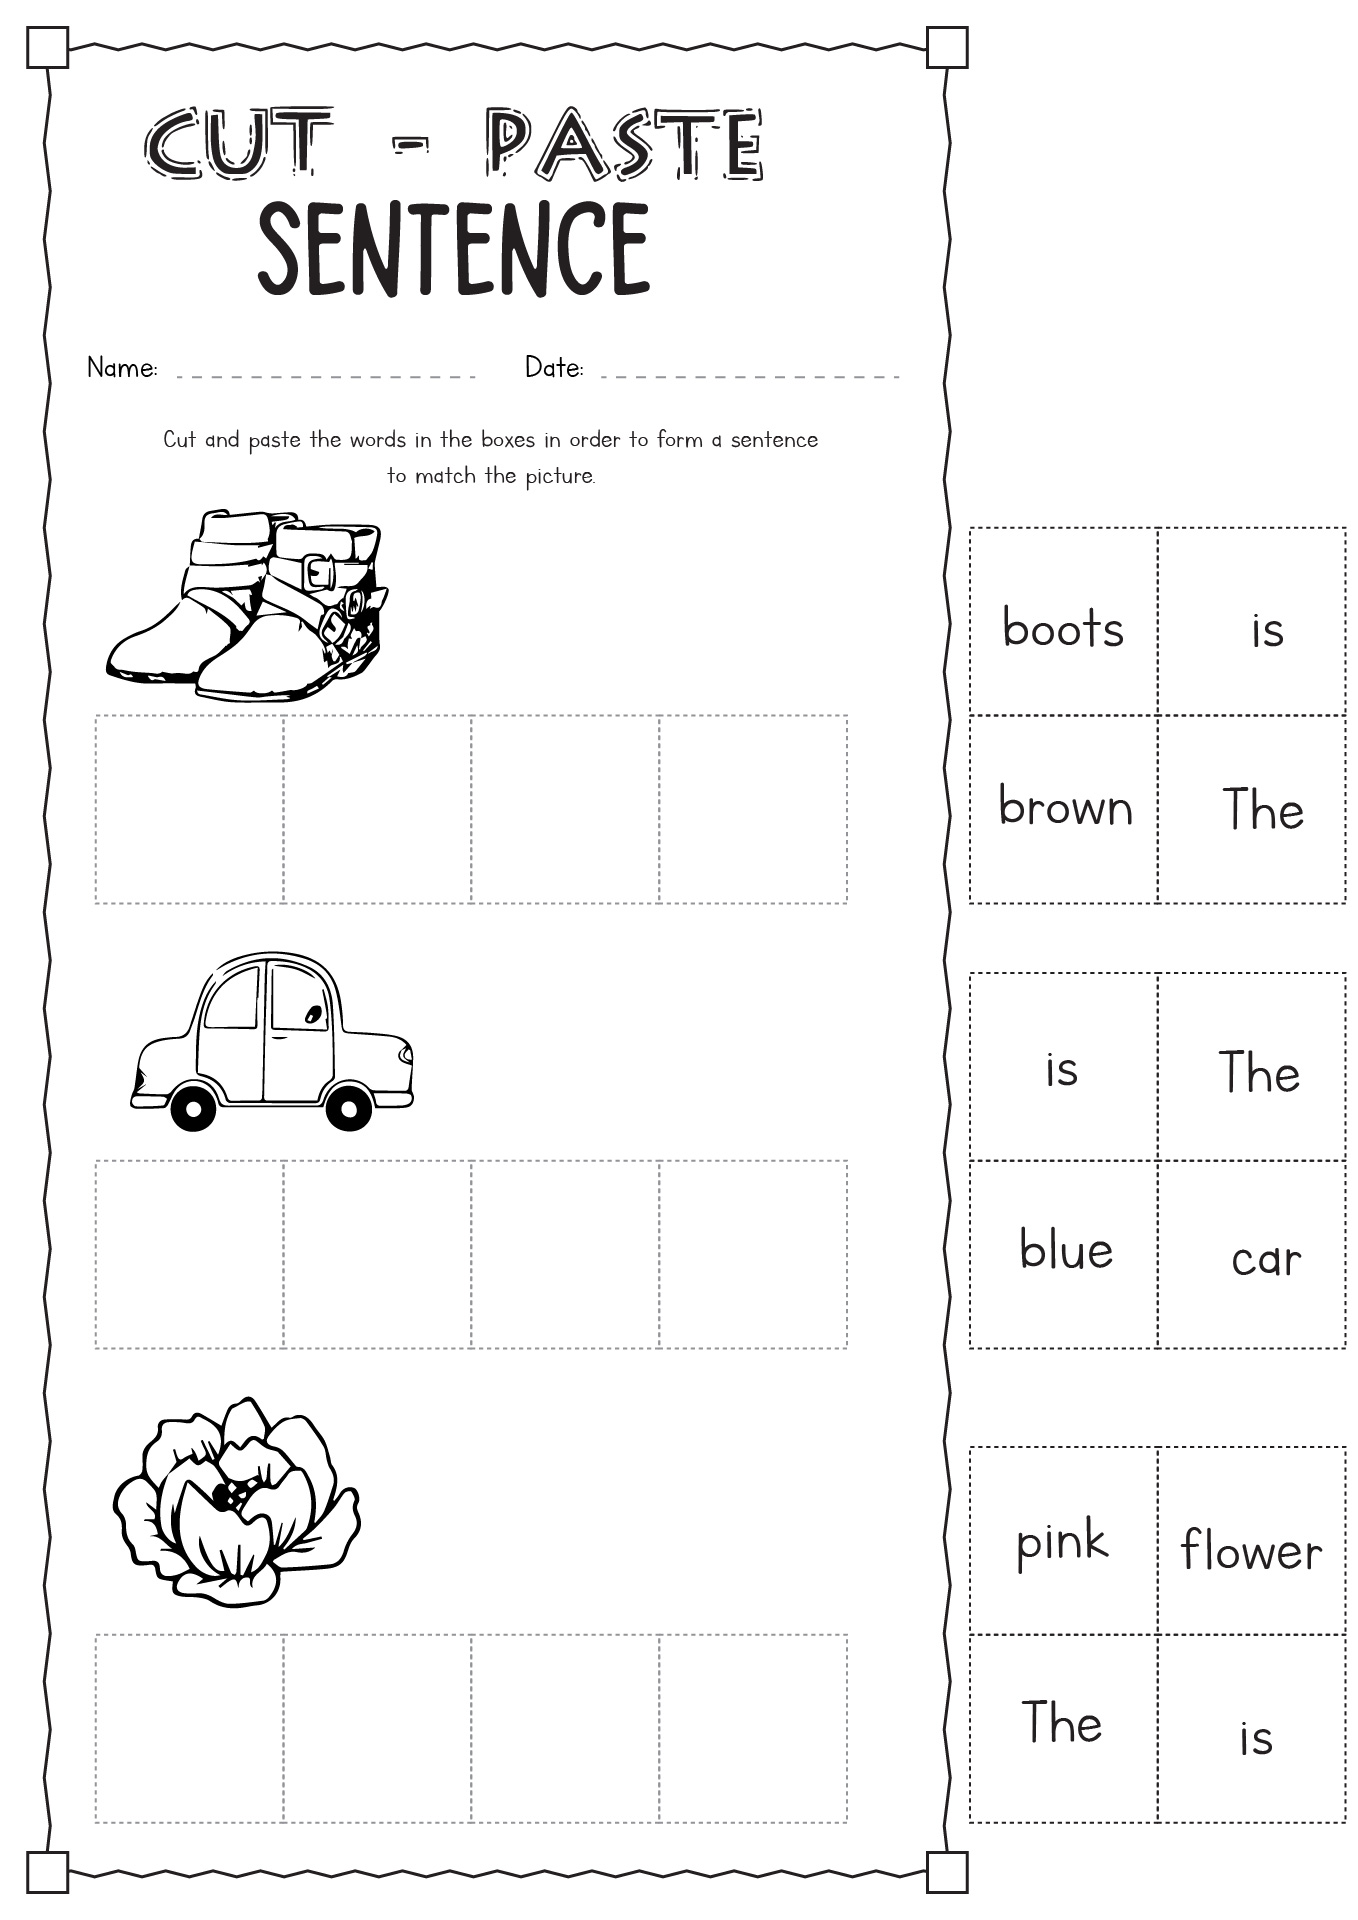 Cut and Paste Sentences Kindergarten Image